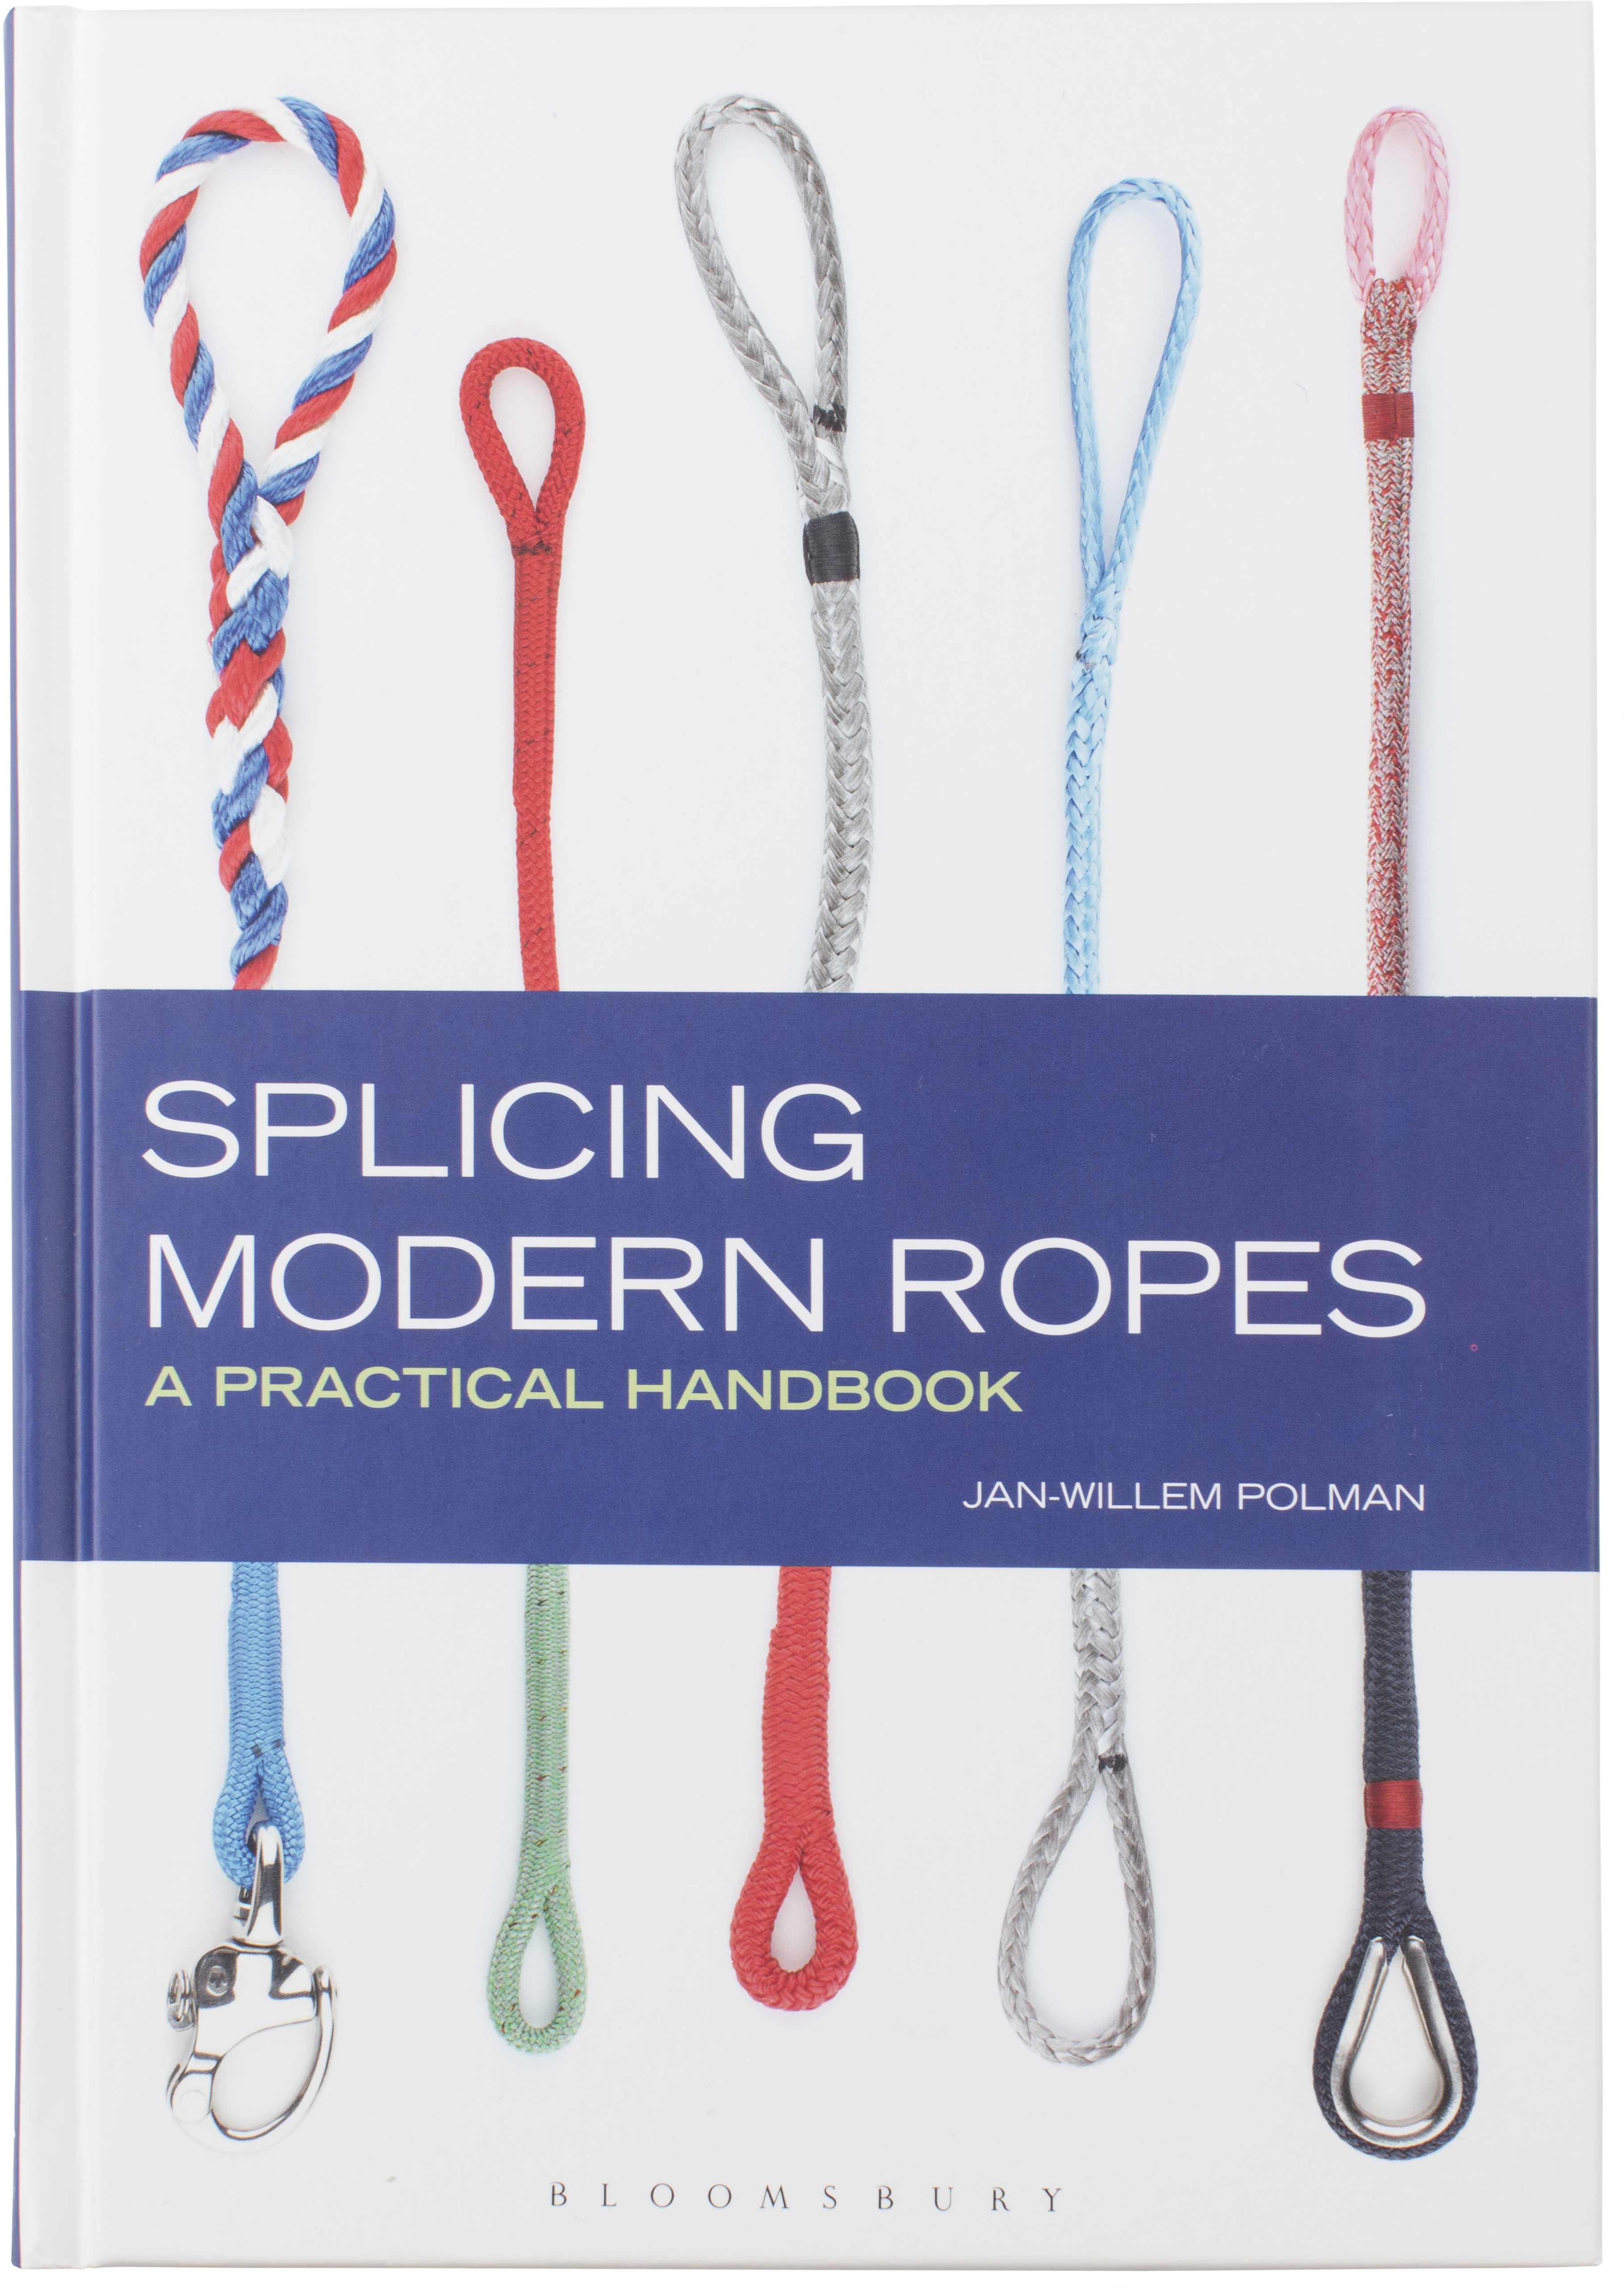 D-Splicer Bok "Splicing modern ropes"